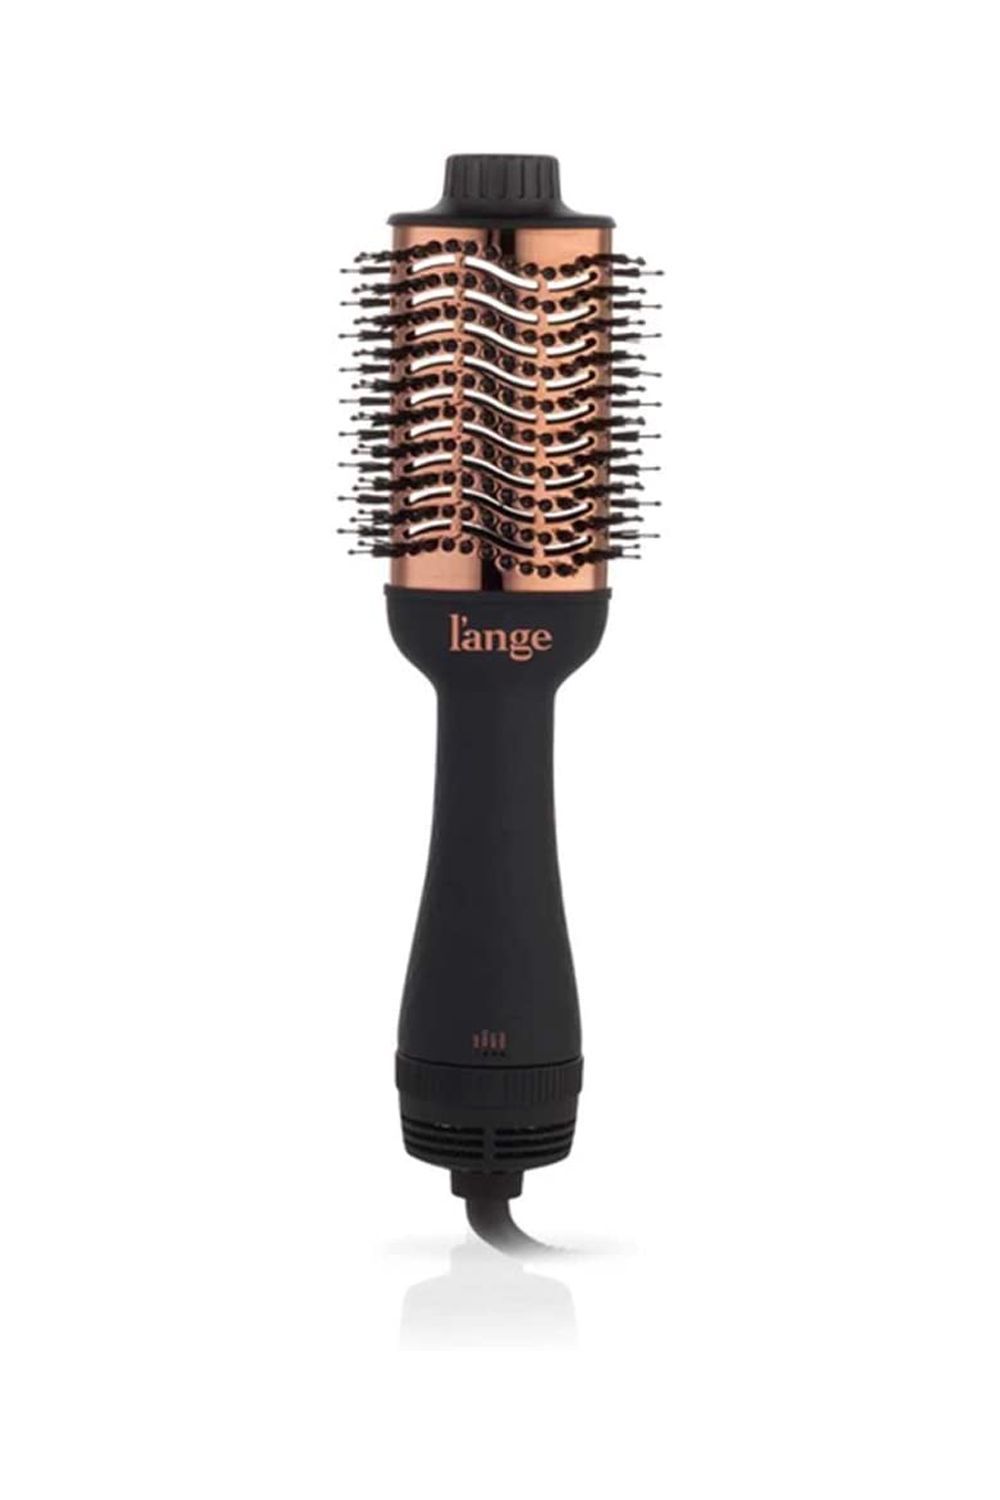 12 Best Hair Dryer Brushes for All Hair Types 2023 - Hot Air Brushes